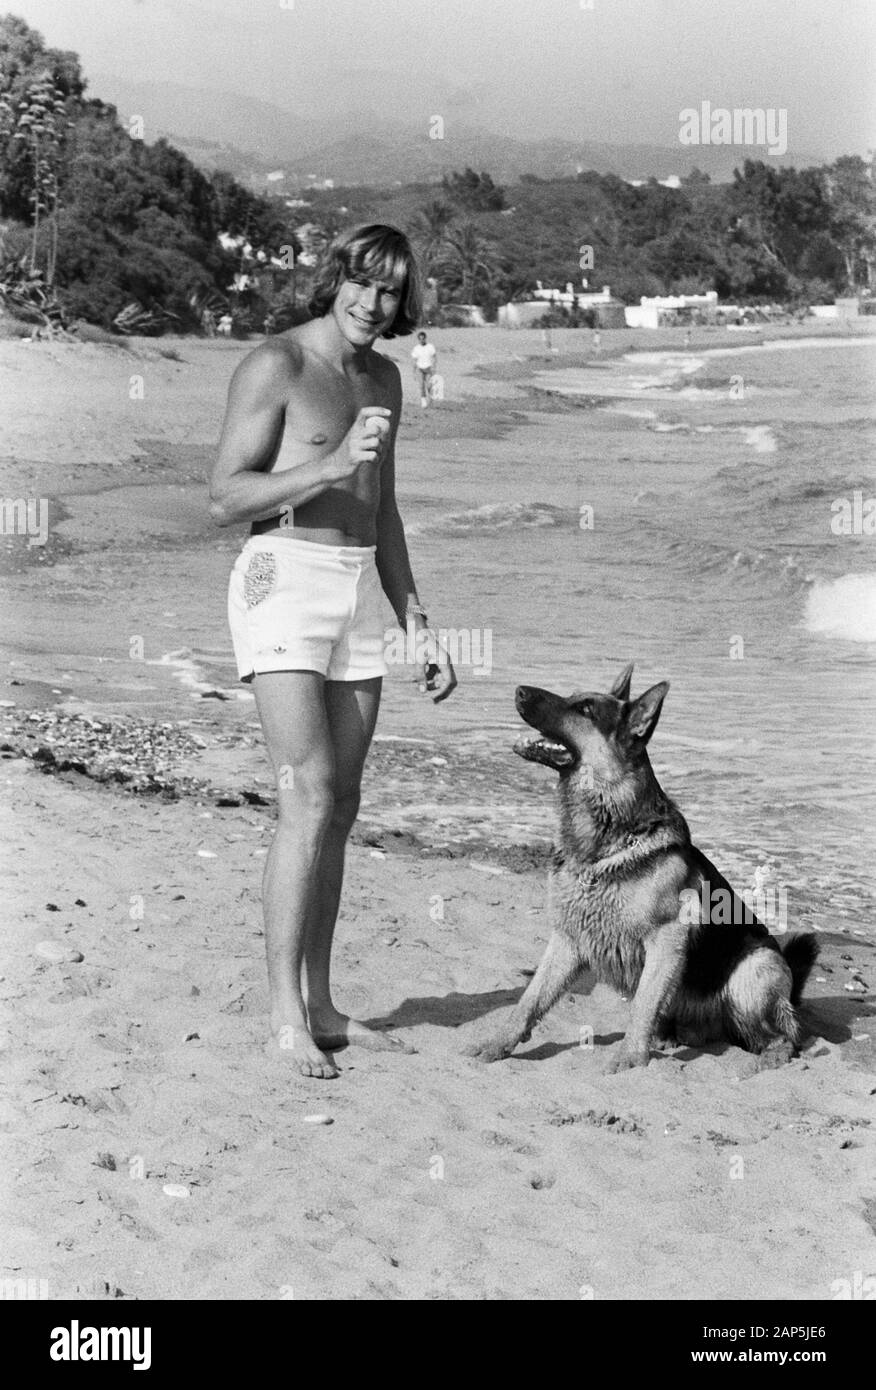 James Hunt, britischer Autorennfahrer, mit seinem Hund am Strand, um 1974. Controlador de automovilismo británico James Hunt con su perro mascota en la playa, alrededor de 1974. Foto de stock